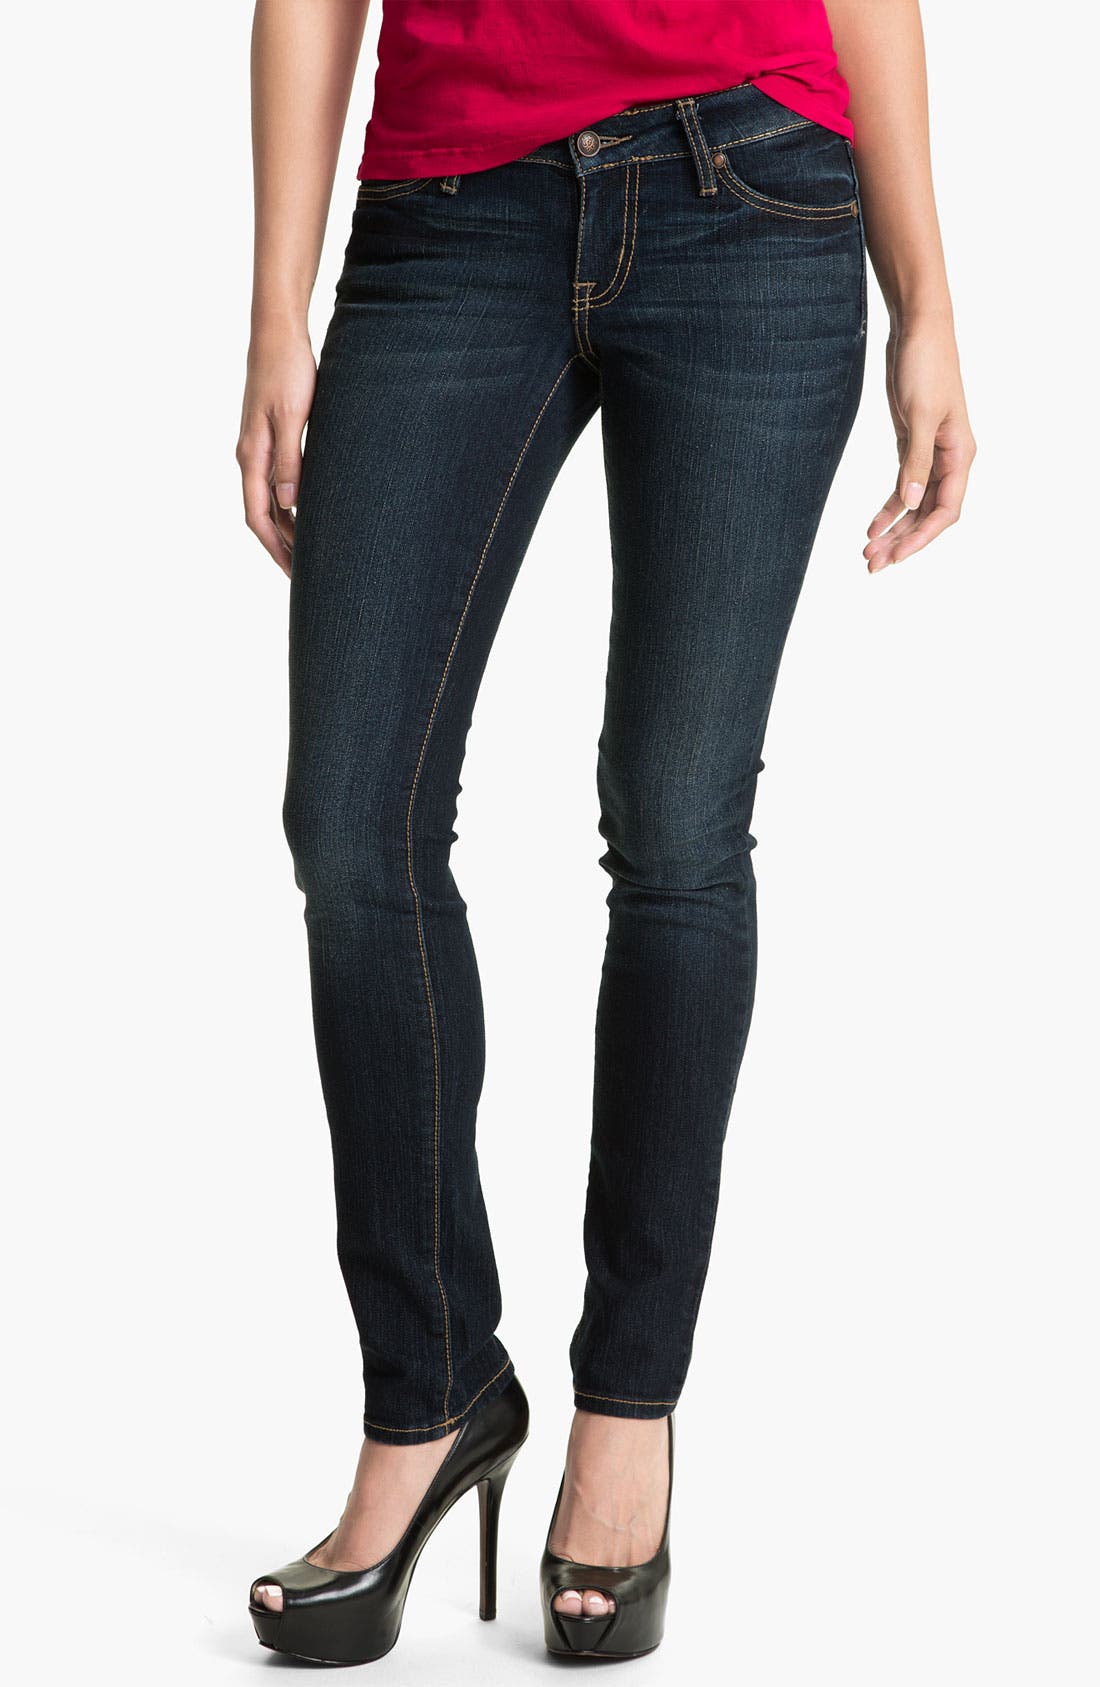 jessica simpson ankle jeans